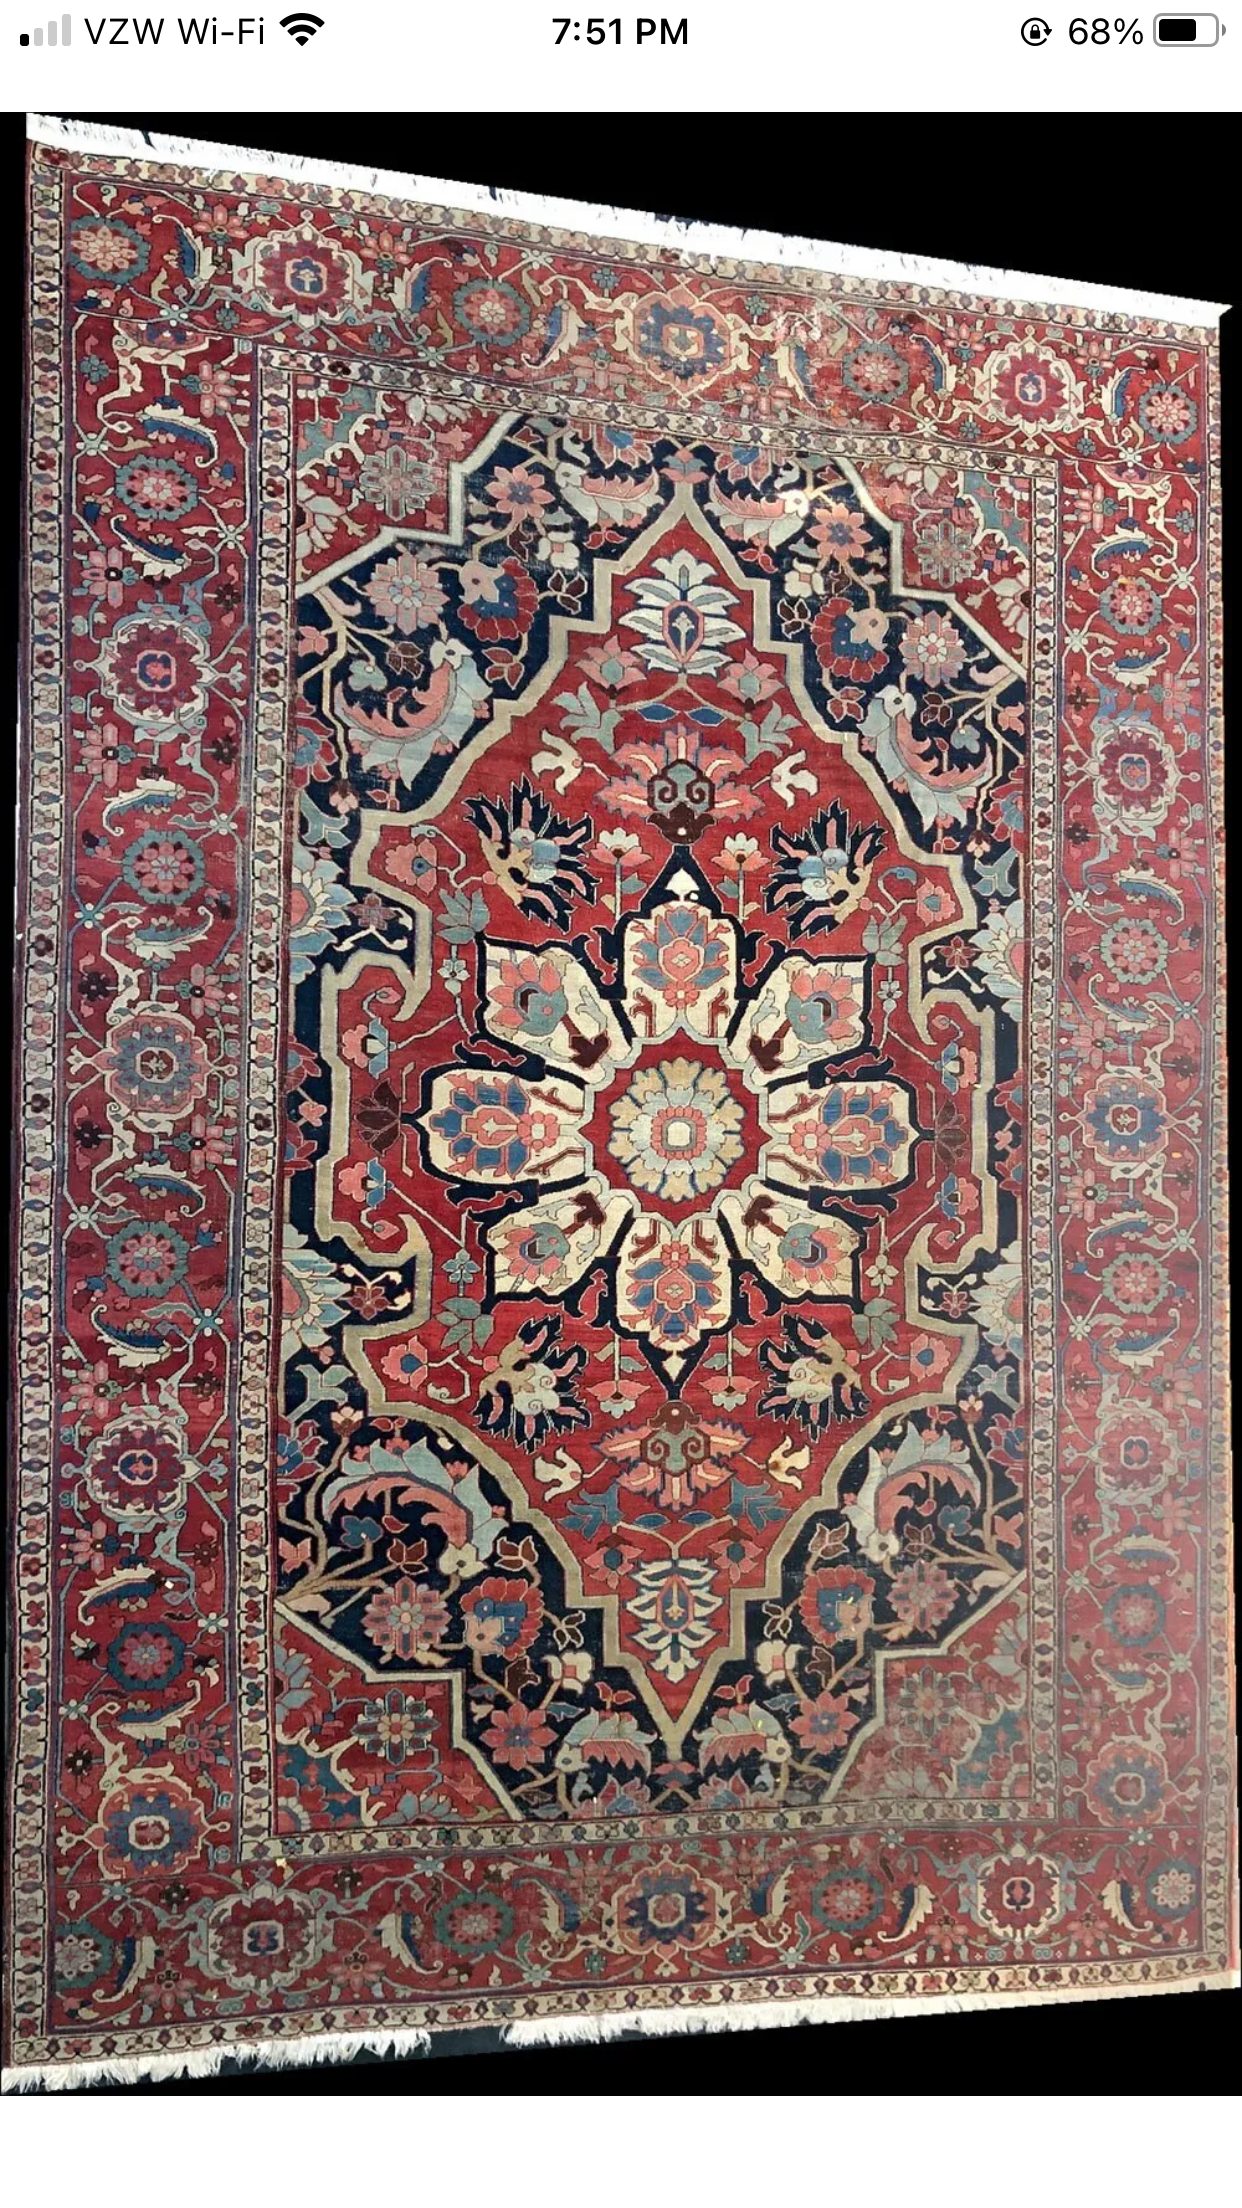 A Stunning Antique Persian Serapi Rug